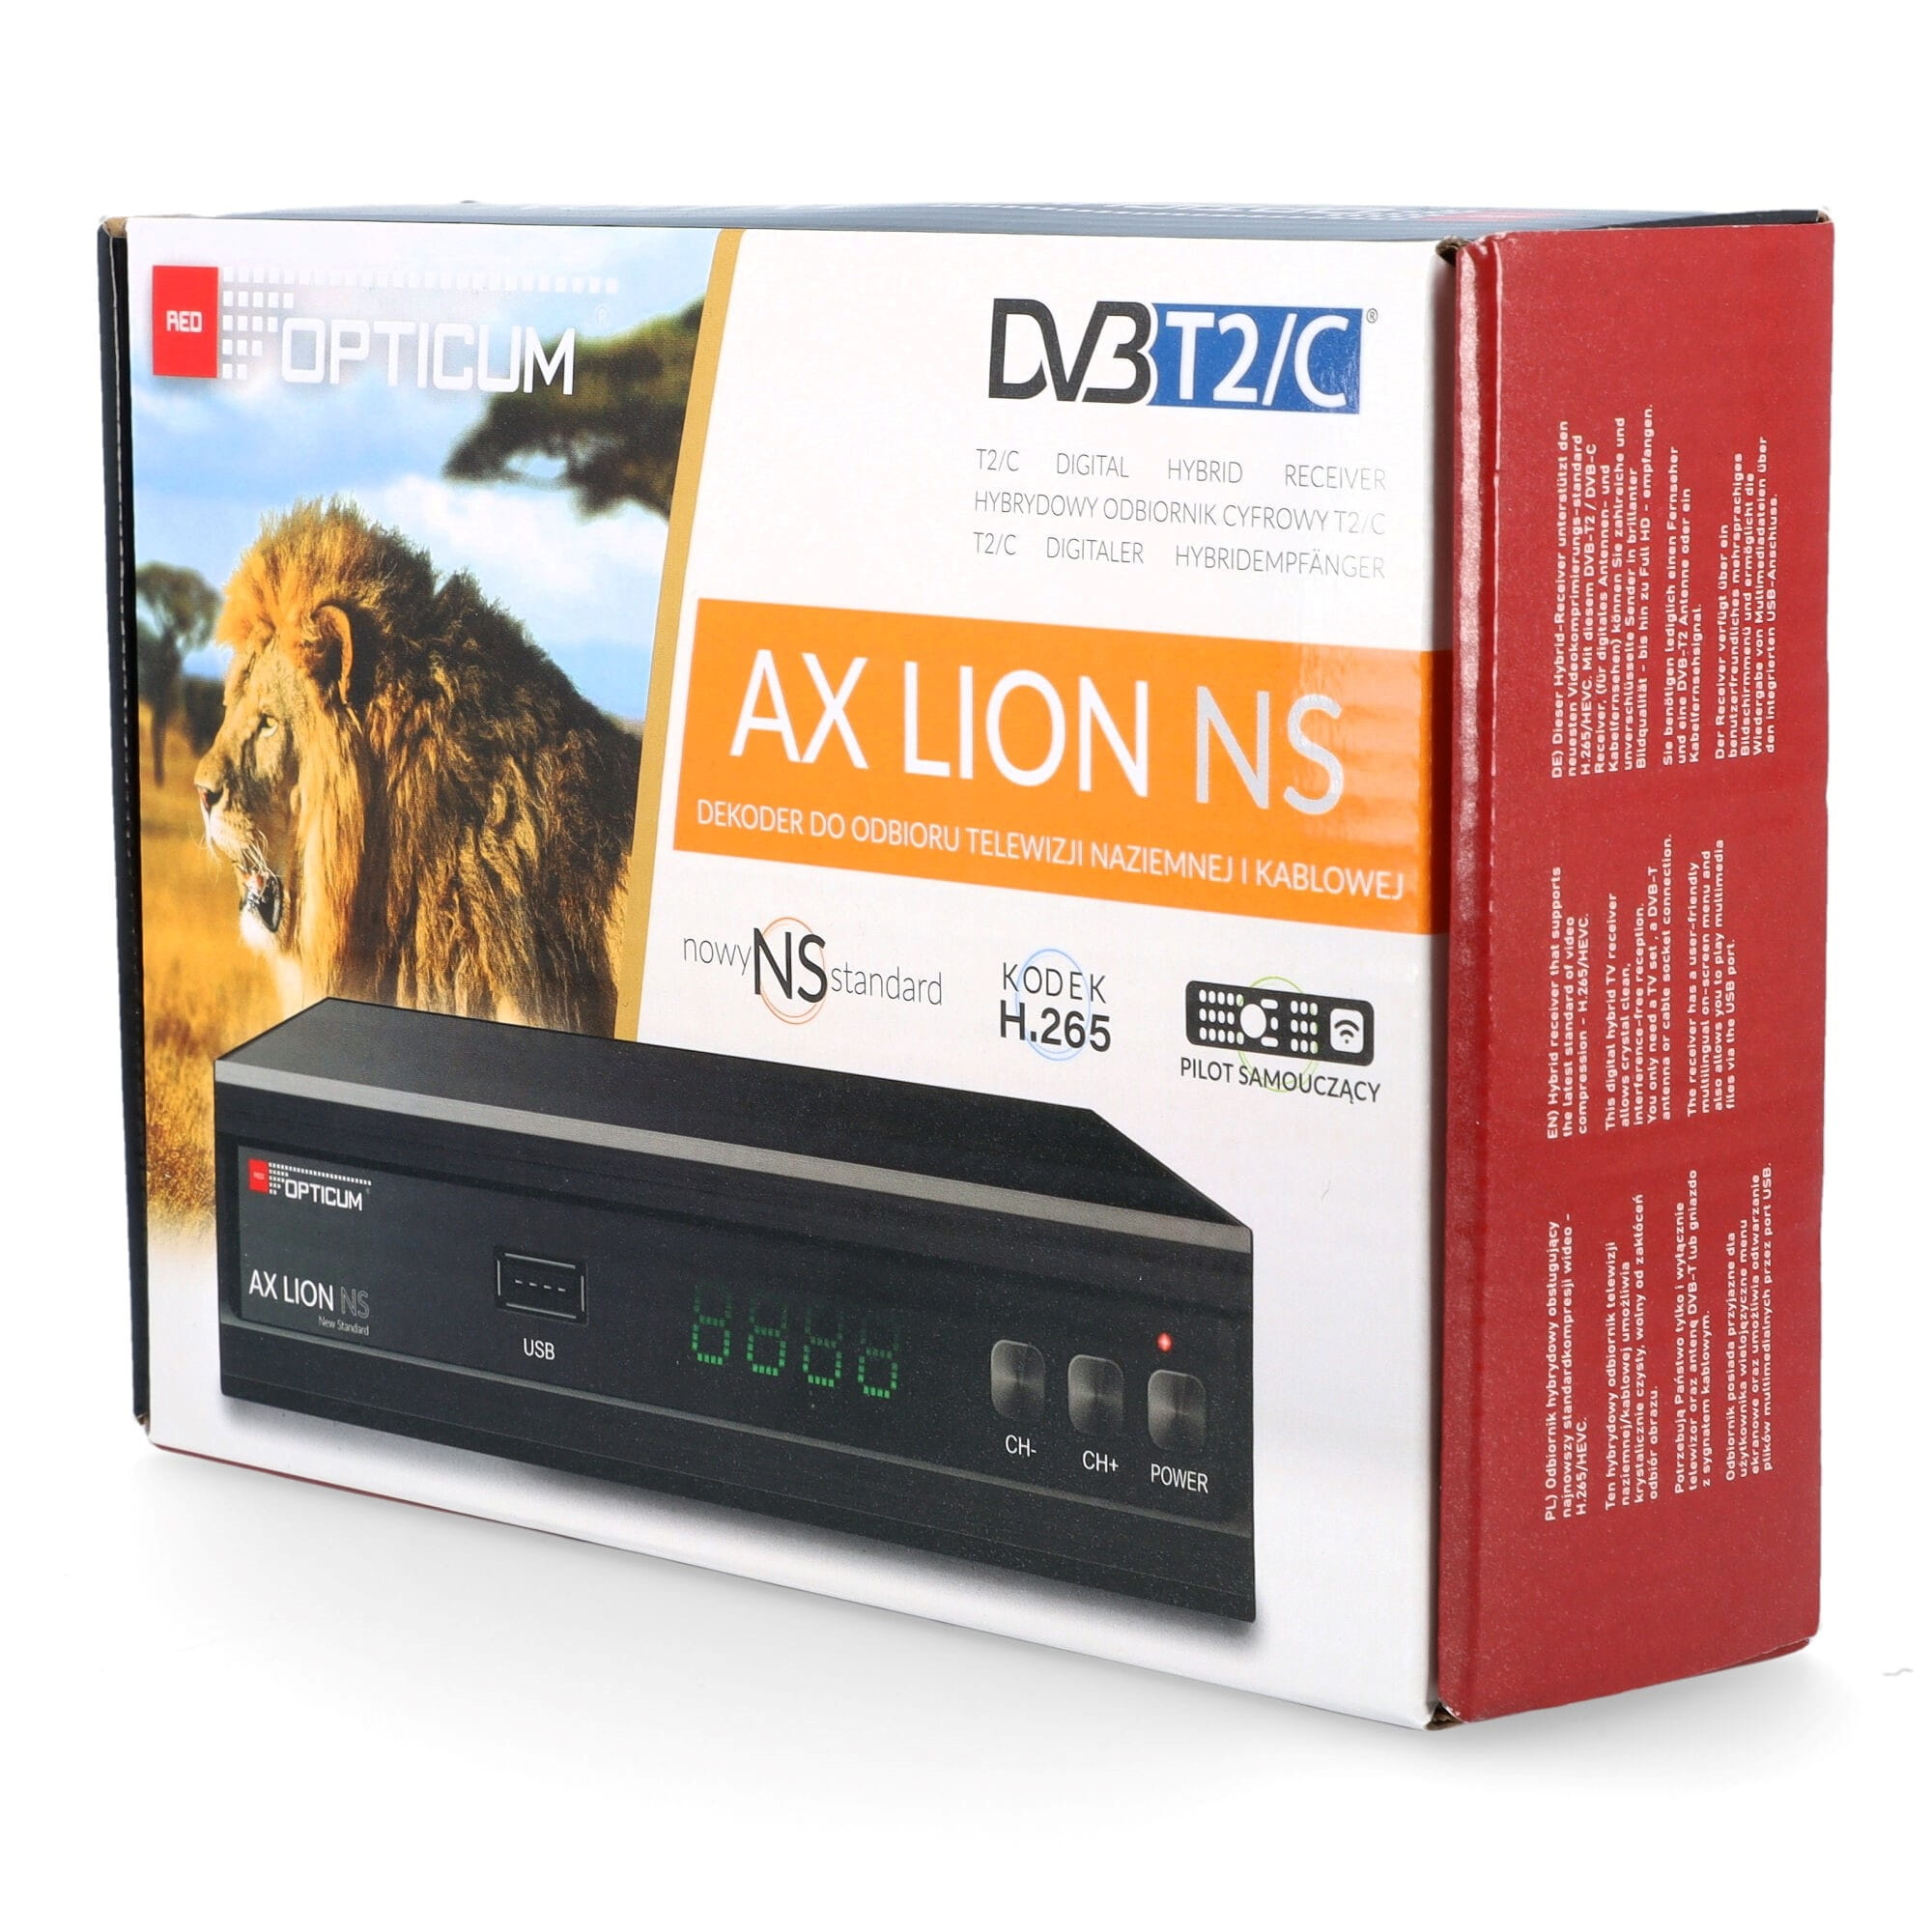 Opticum AX Lion 5 Air - Receptor Dongle TDT-HD - Euroconector